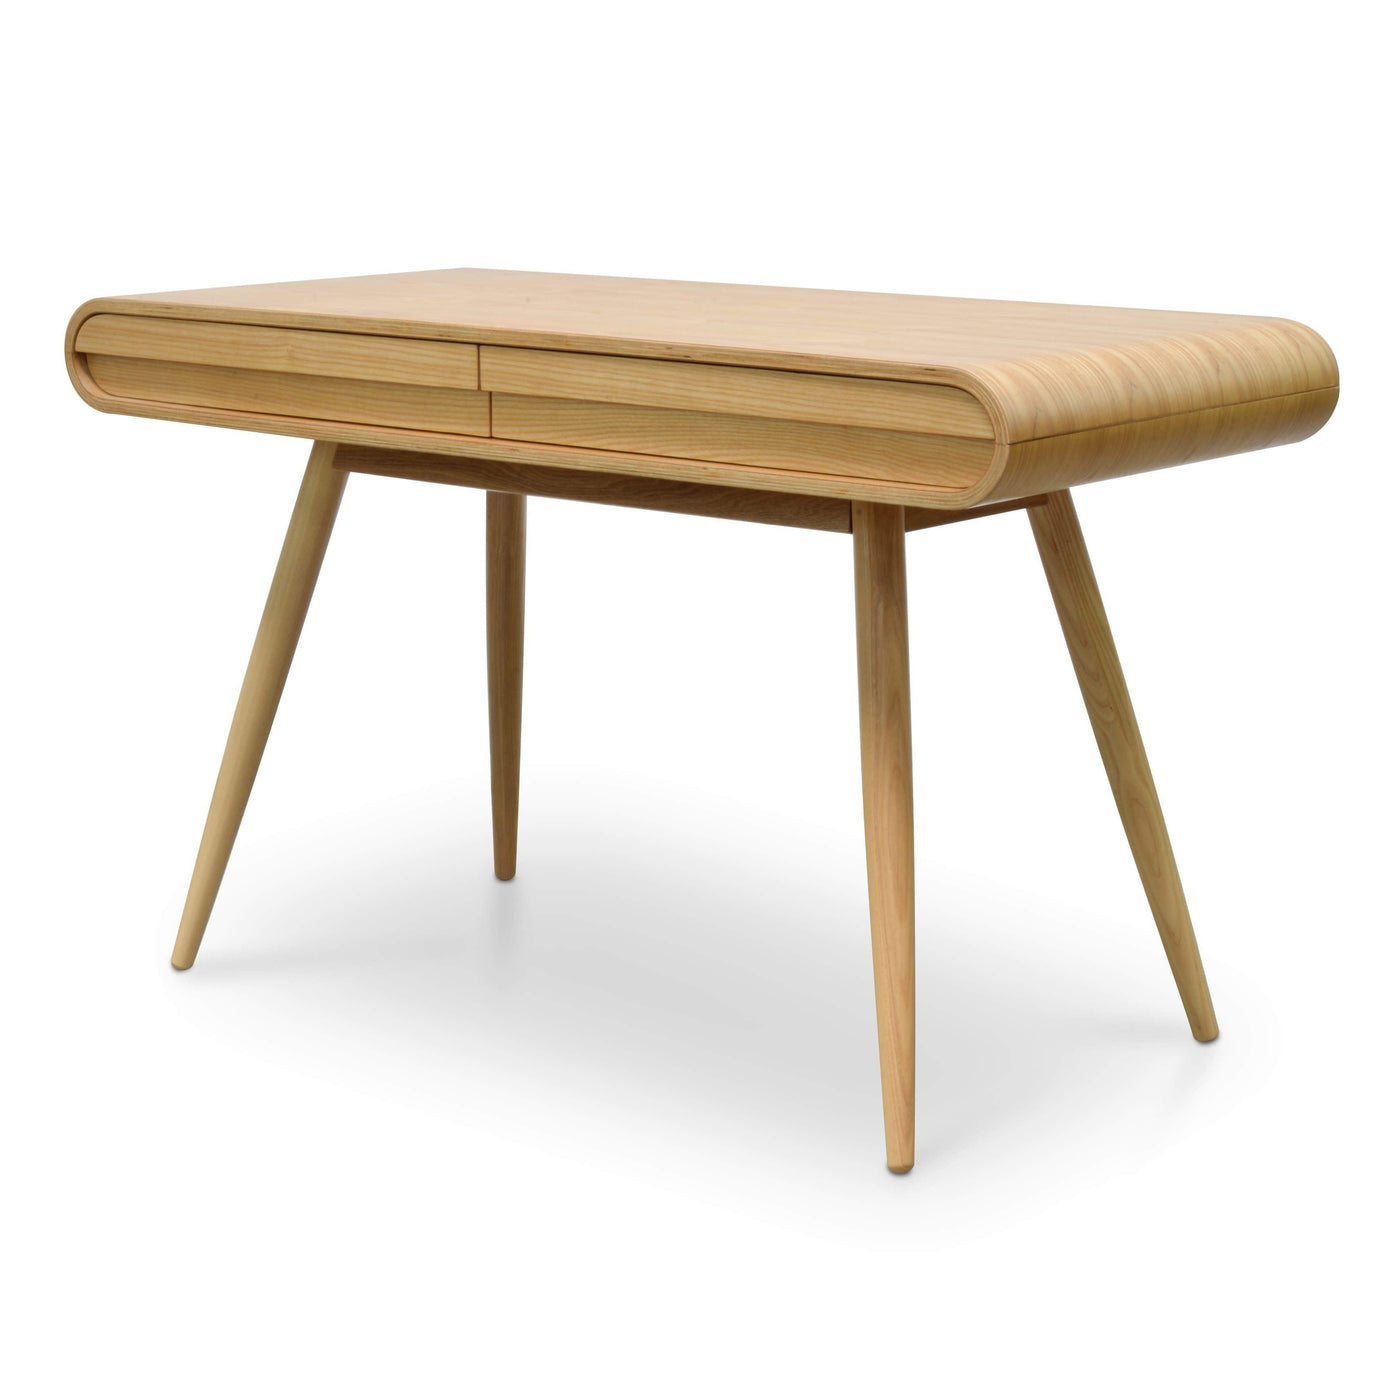 Narrow Wood Console Table- Natural